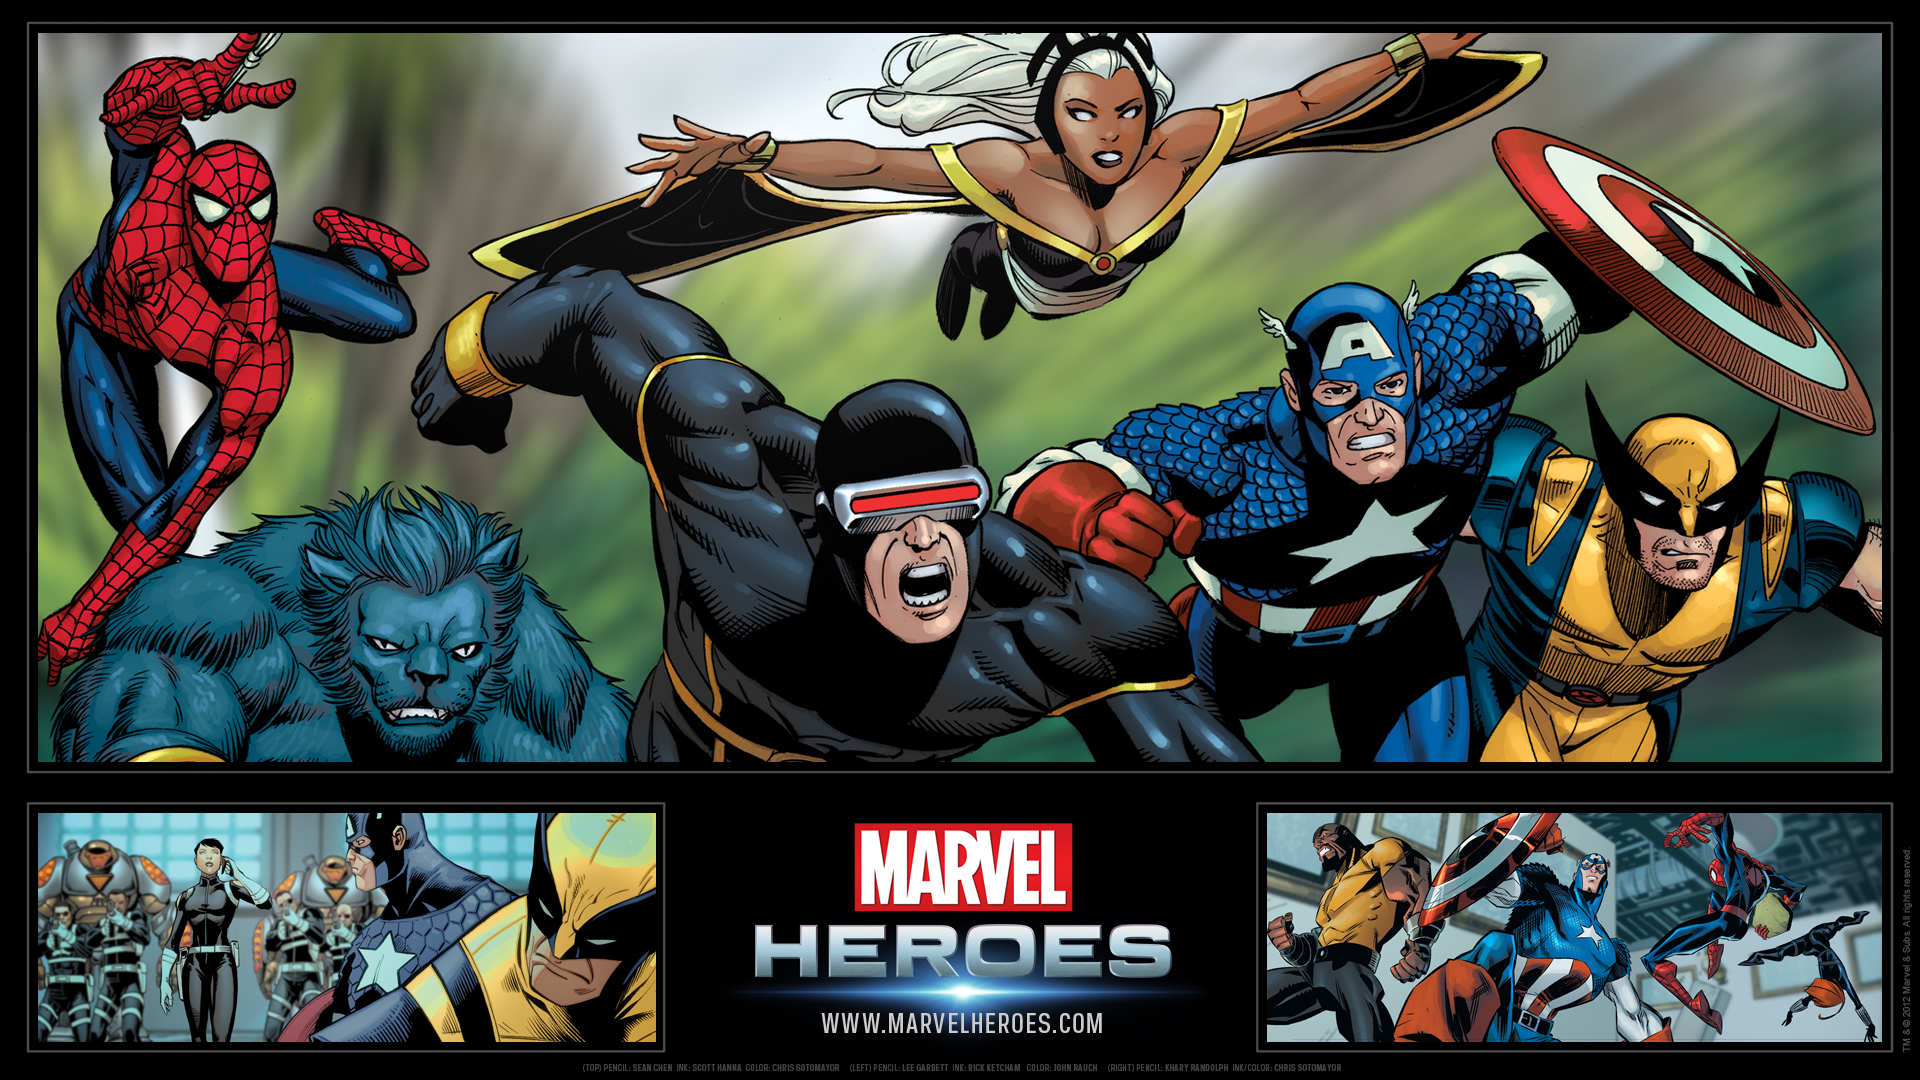 Marvel Heroes Full HD Wallpaper 1920x1080